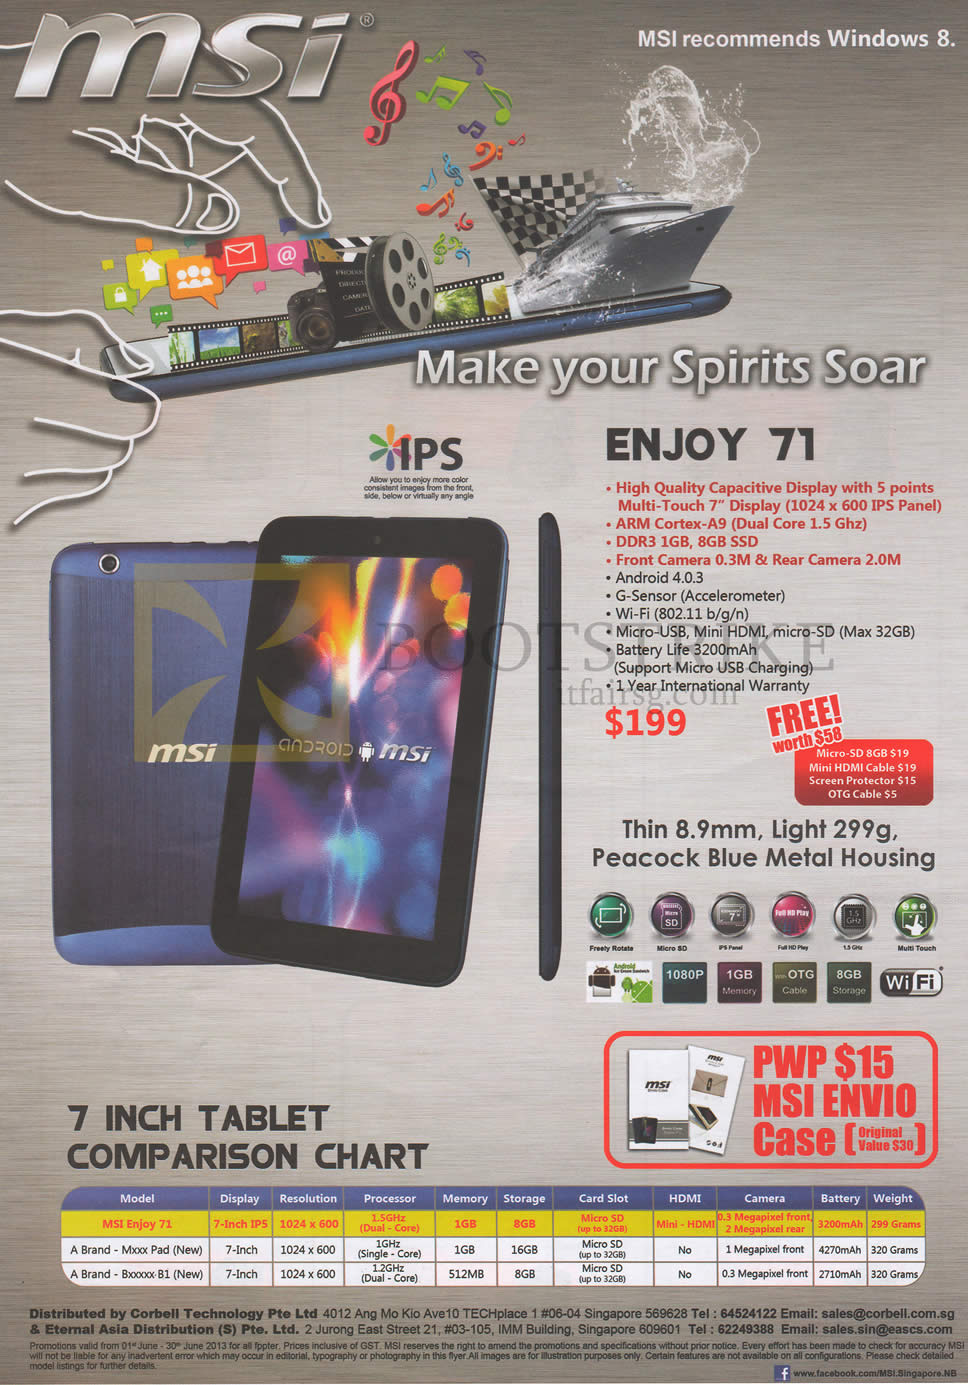 PC SHOW 2013 price list image brochure of MSI Enjoy 71 Tablet